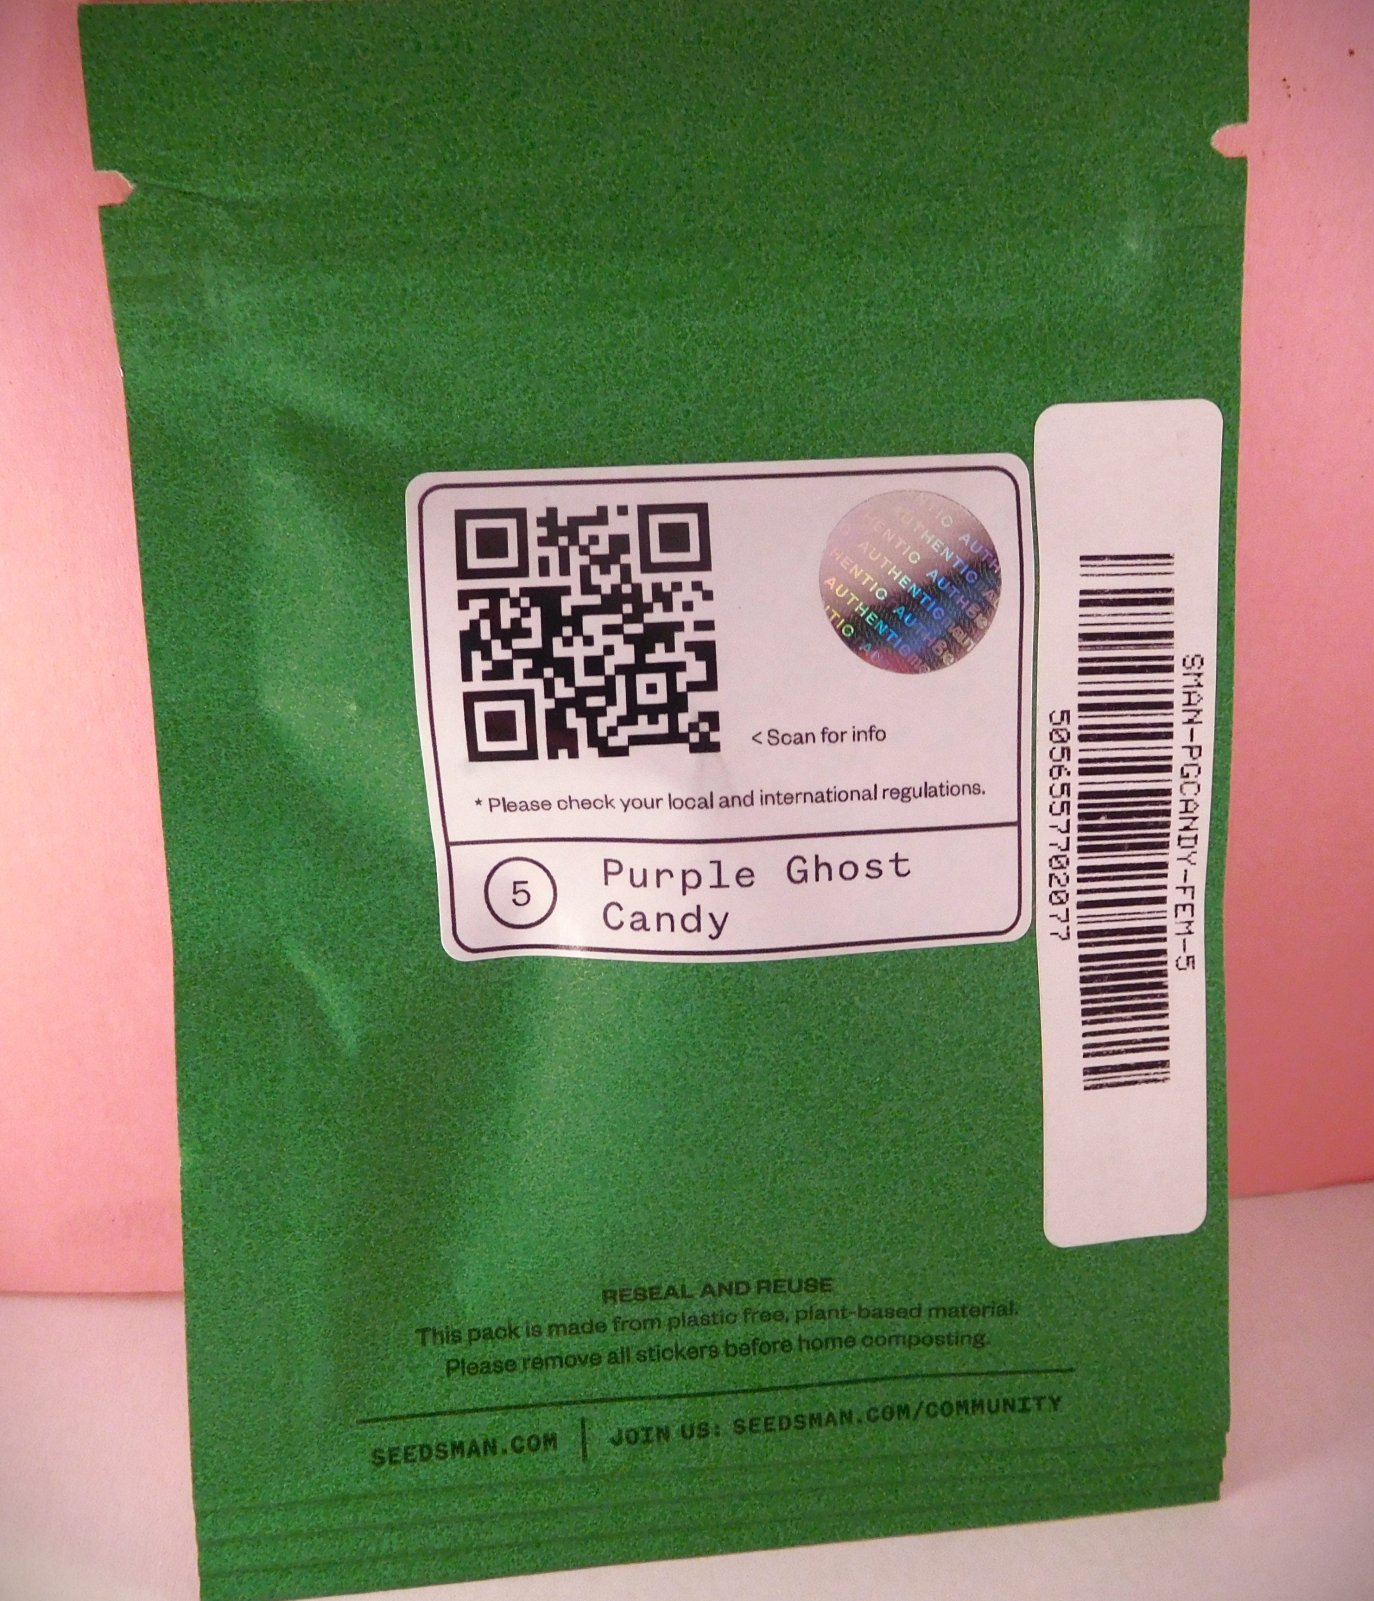 Purple Ghost Candy by Seedsman 5 (2)2.JPG